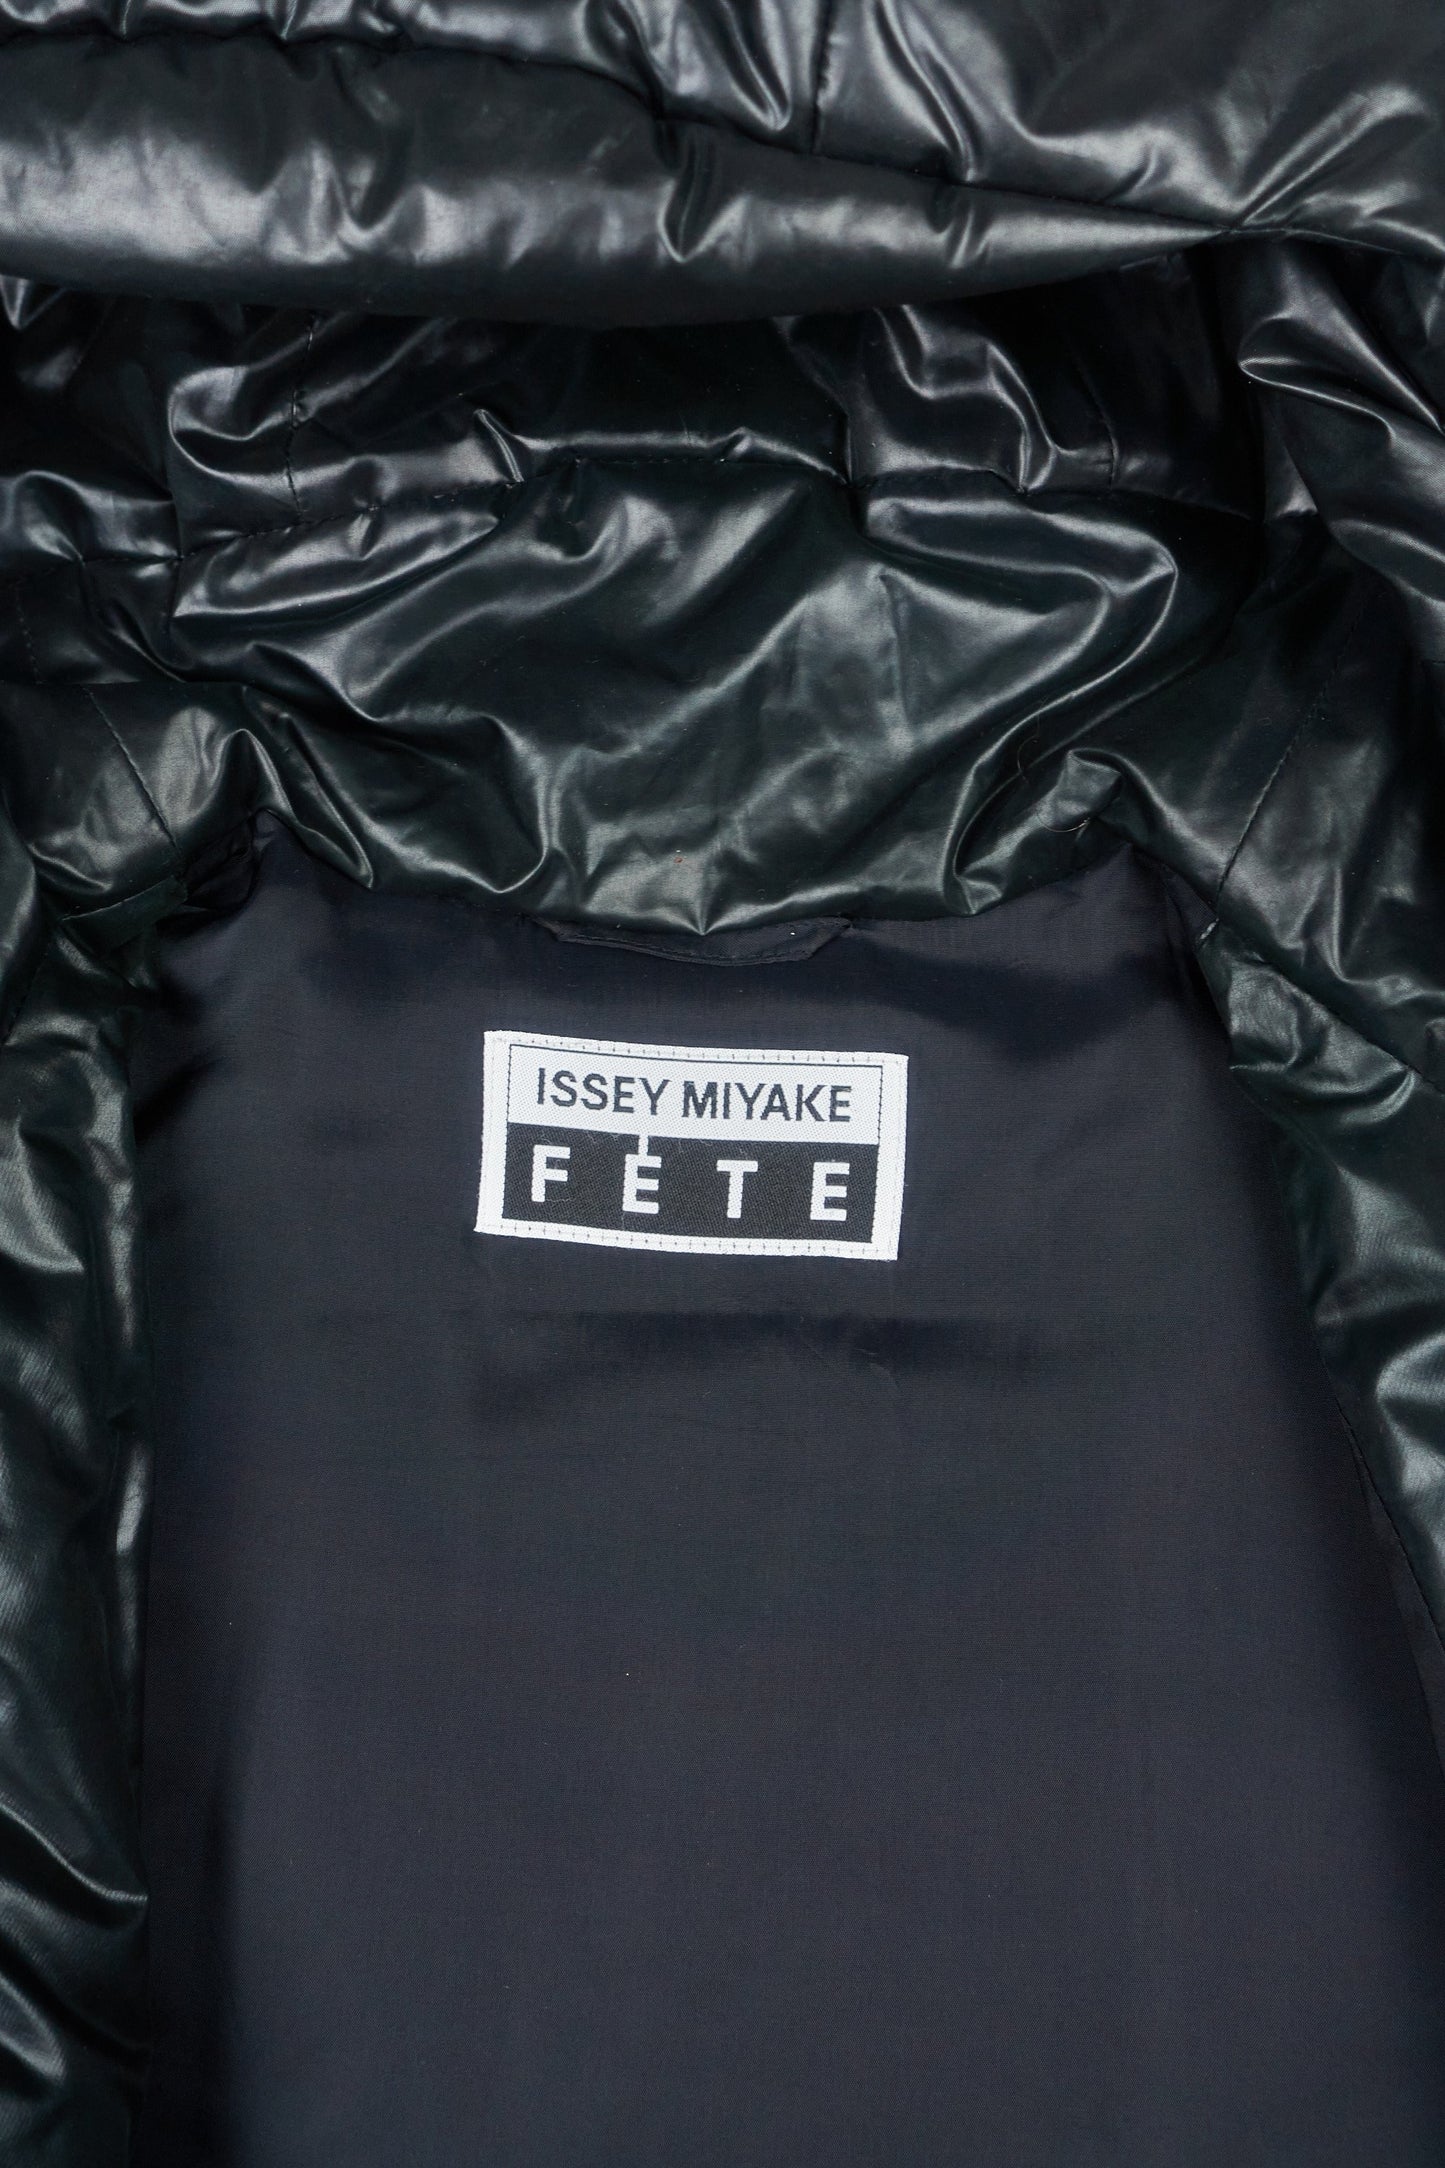 Issey Miyake FETE rubbish bag coat